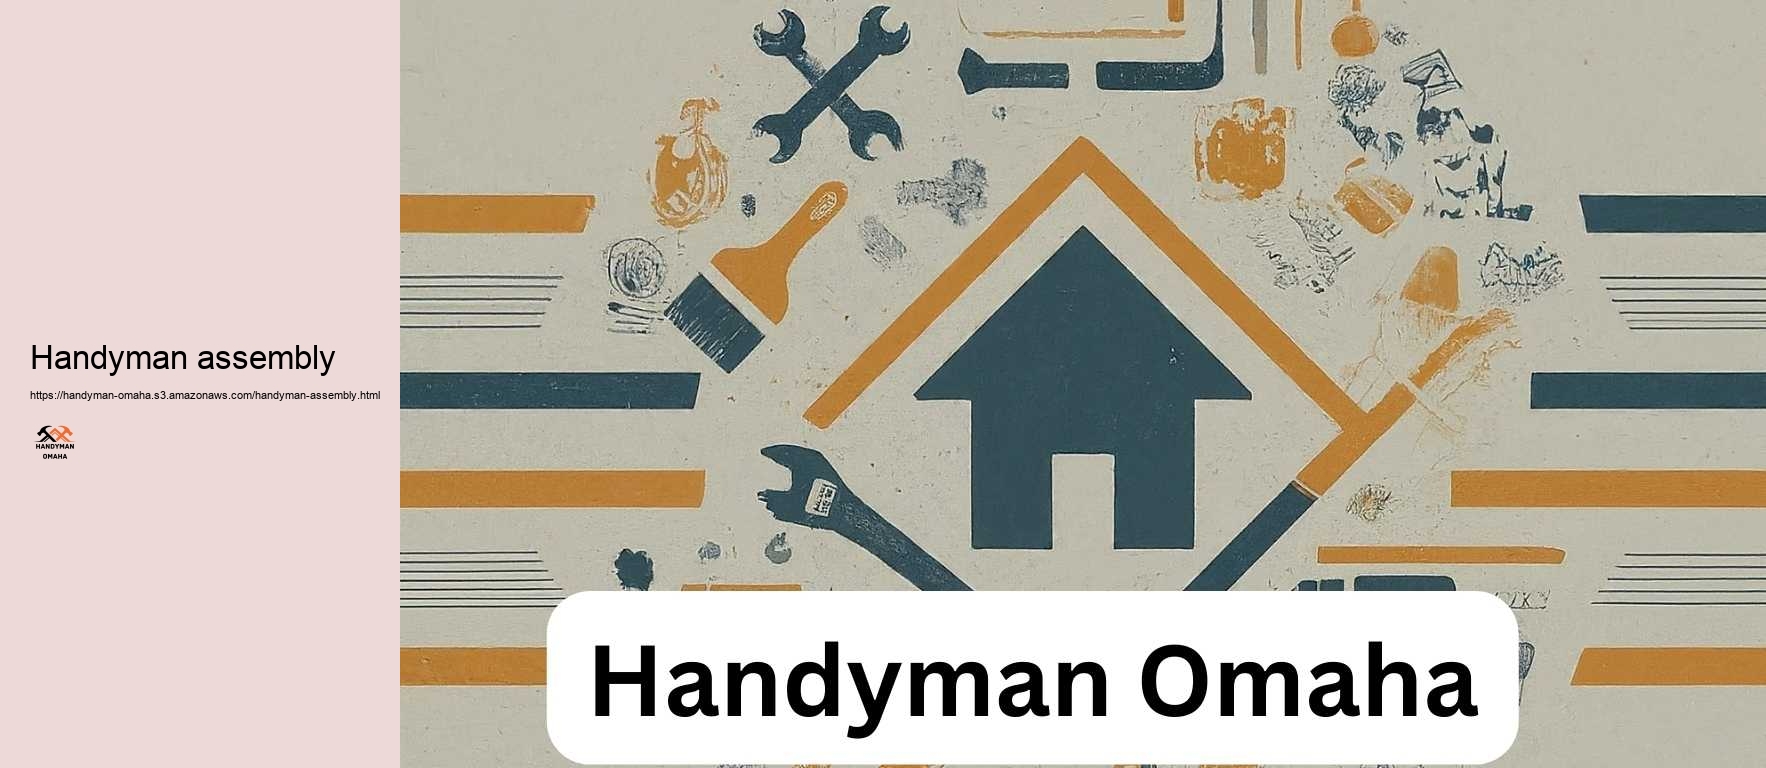 Handyman assembly